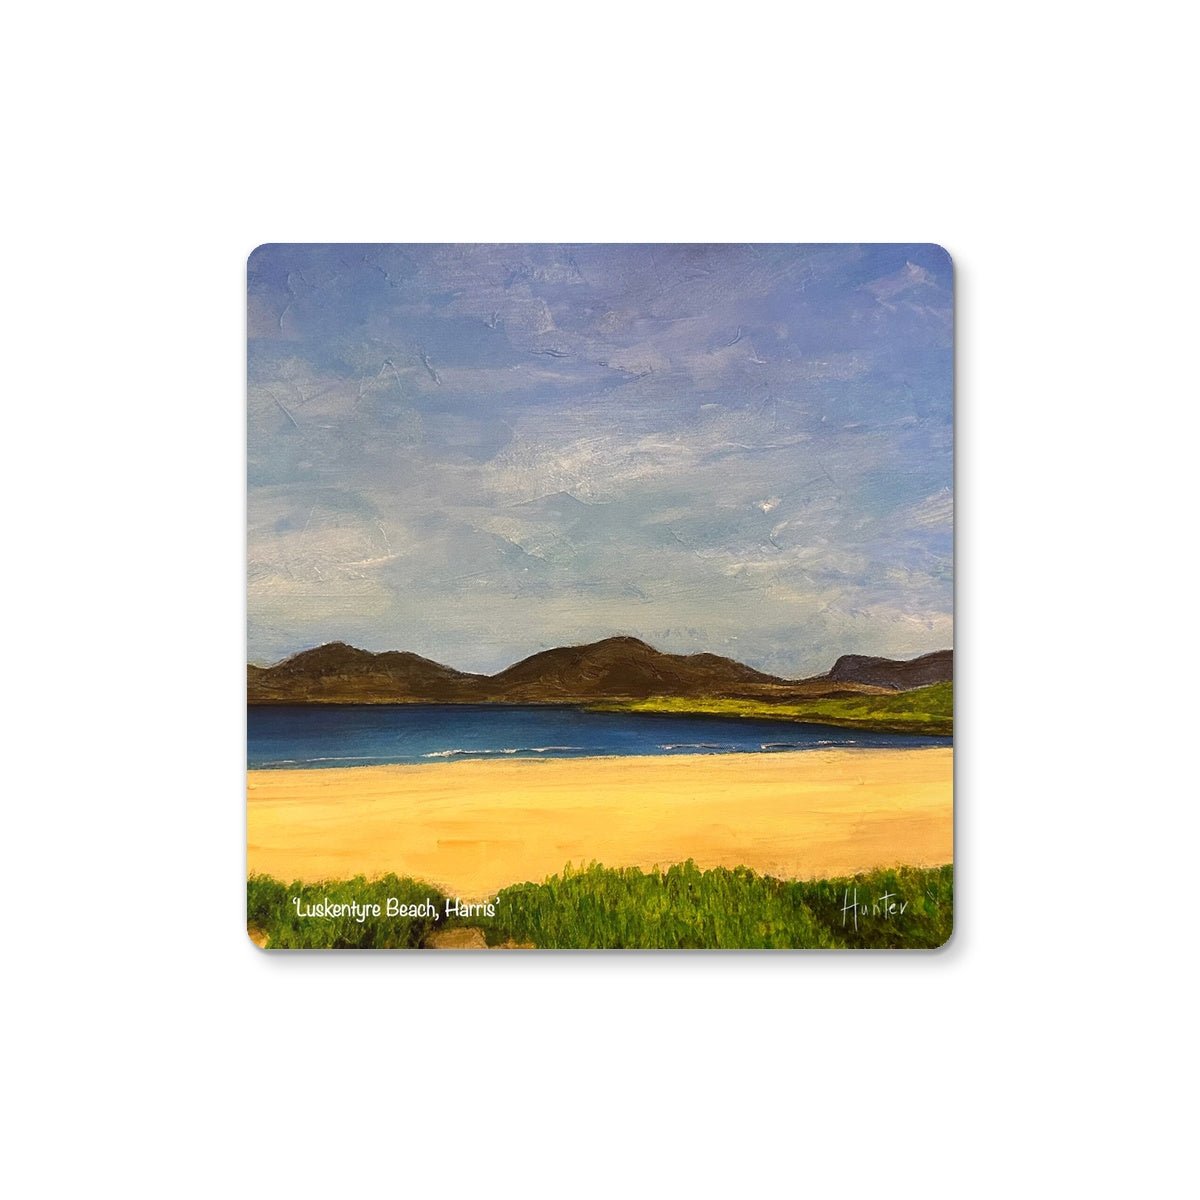 Luskentyre Beach Harris Art Gifts Coaster-Coasters-Hebridean Islands Art Gallery-2 Coasters-Paintings, Prints, Homeware, Art Gifts From Scotland By Scottish Artist Kevin Hunter